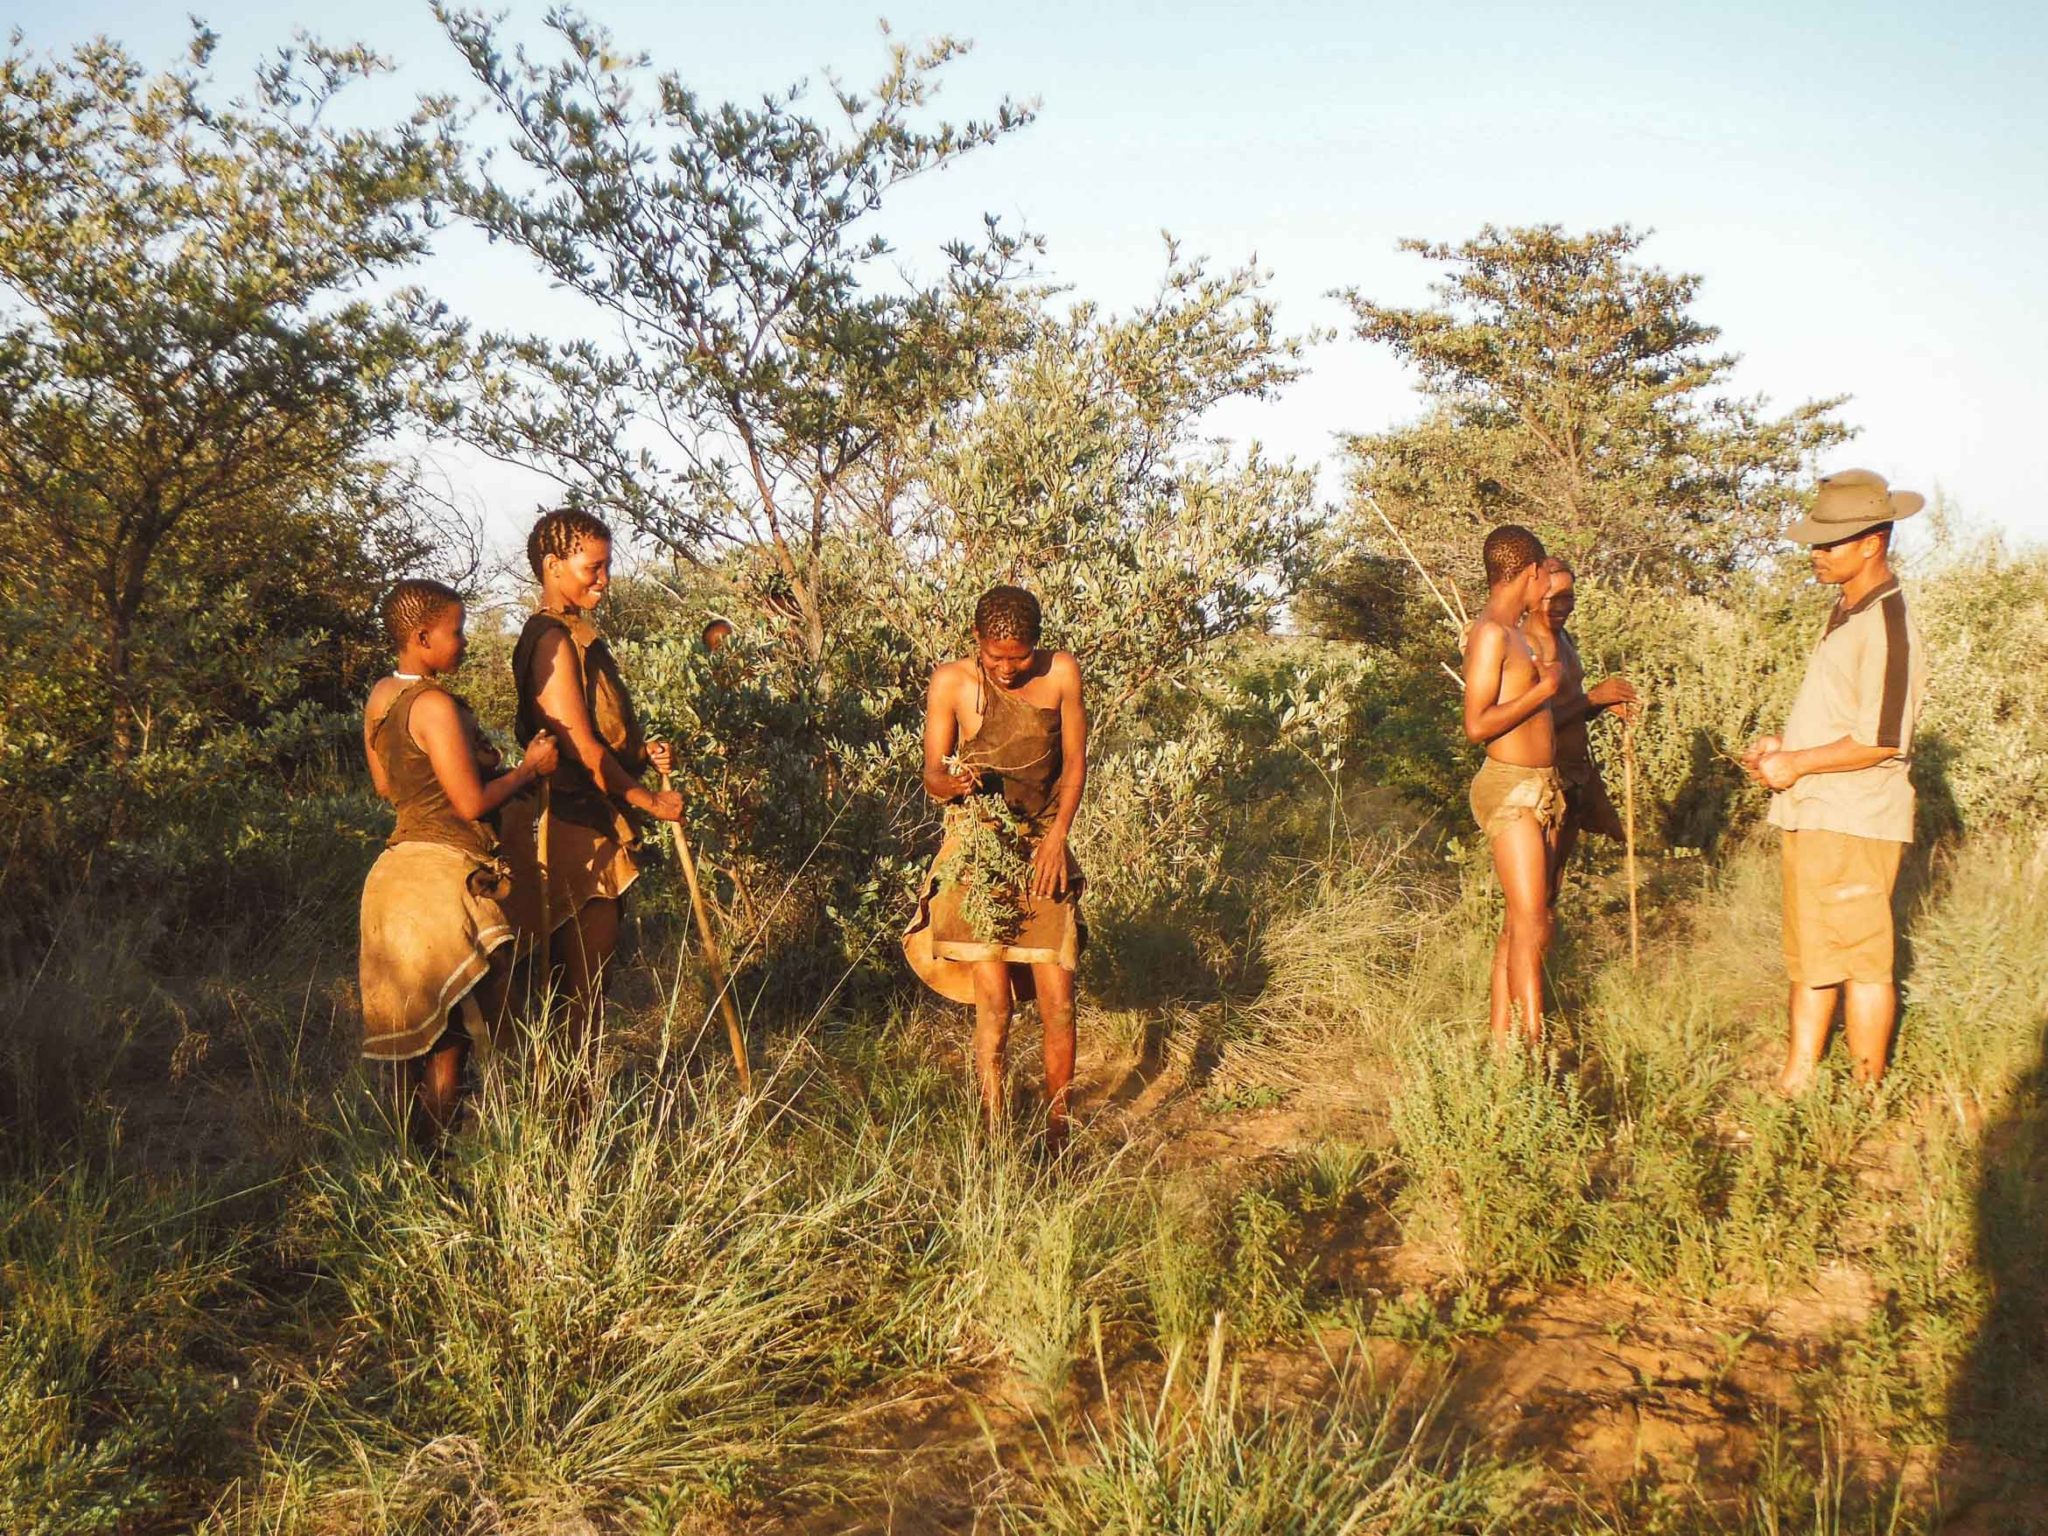 San people bushmen walk Botswana